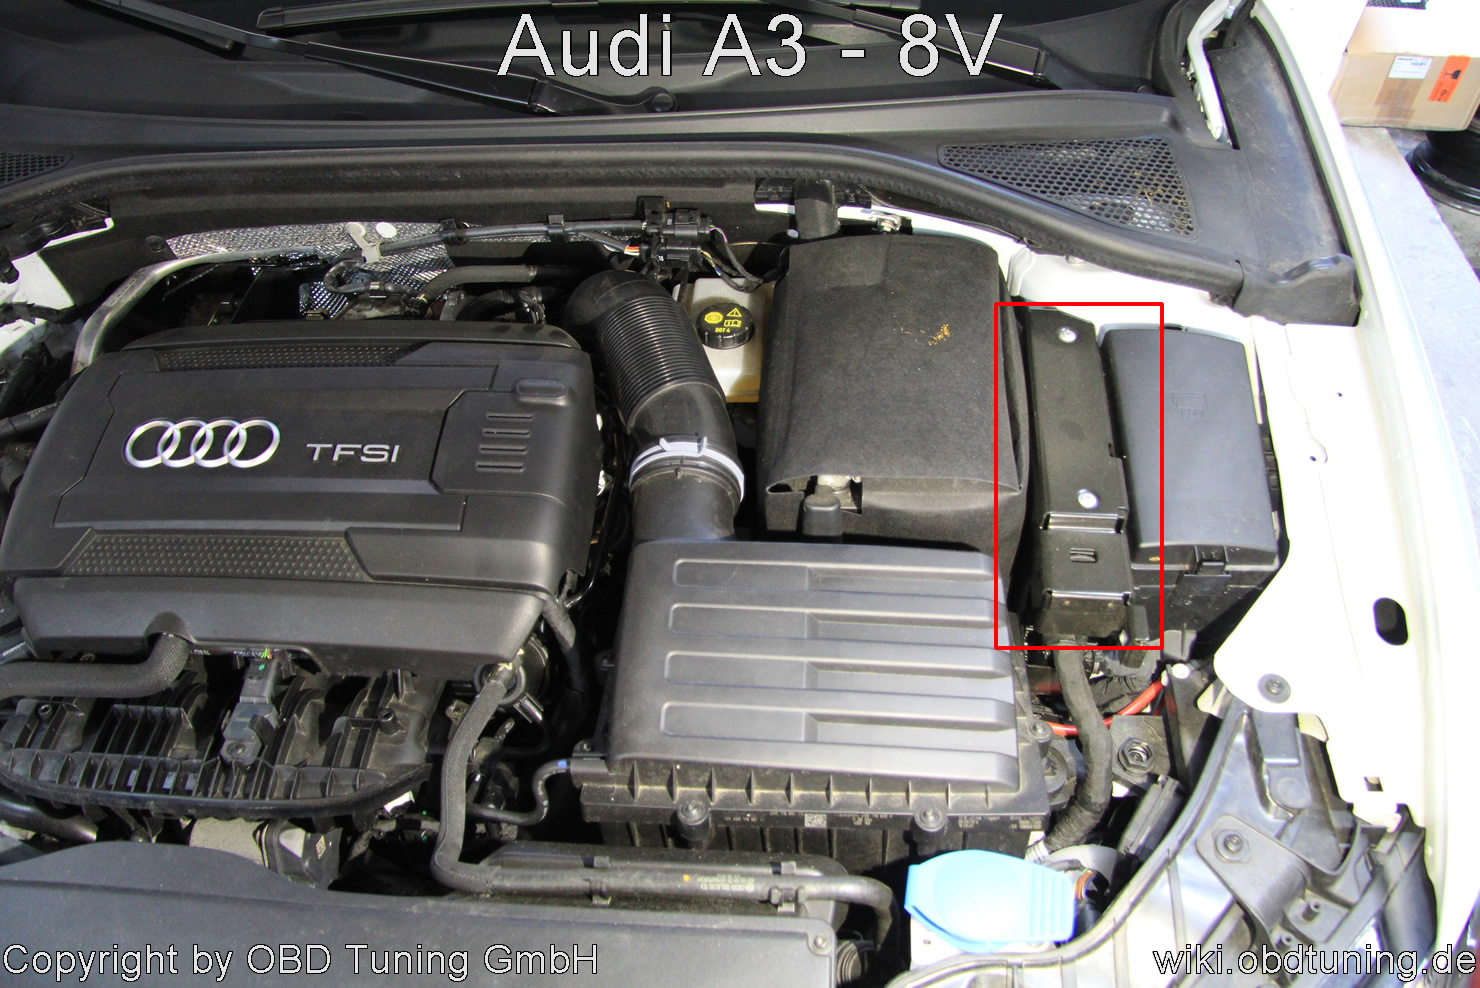 Audi A3 8V ECU.jpg